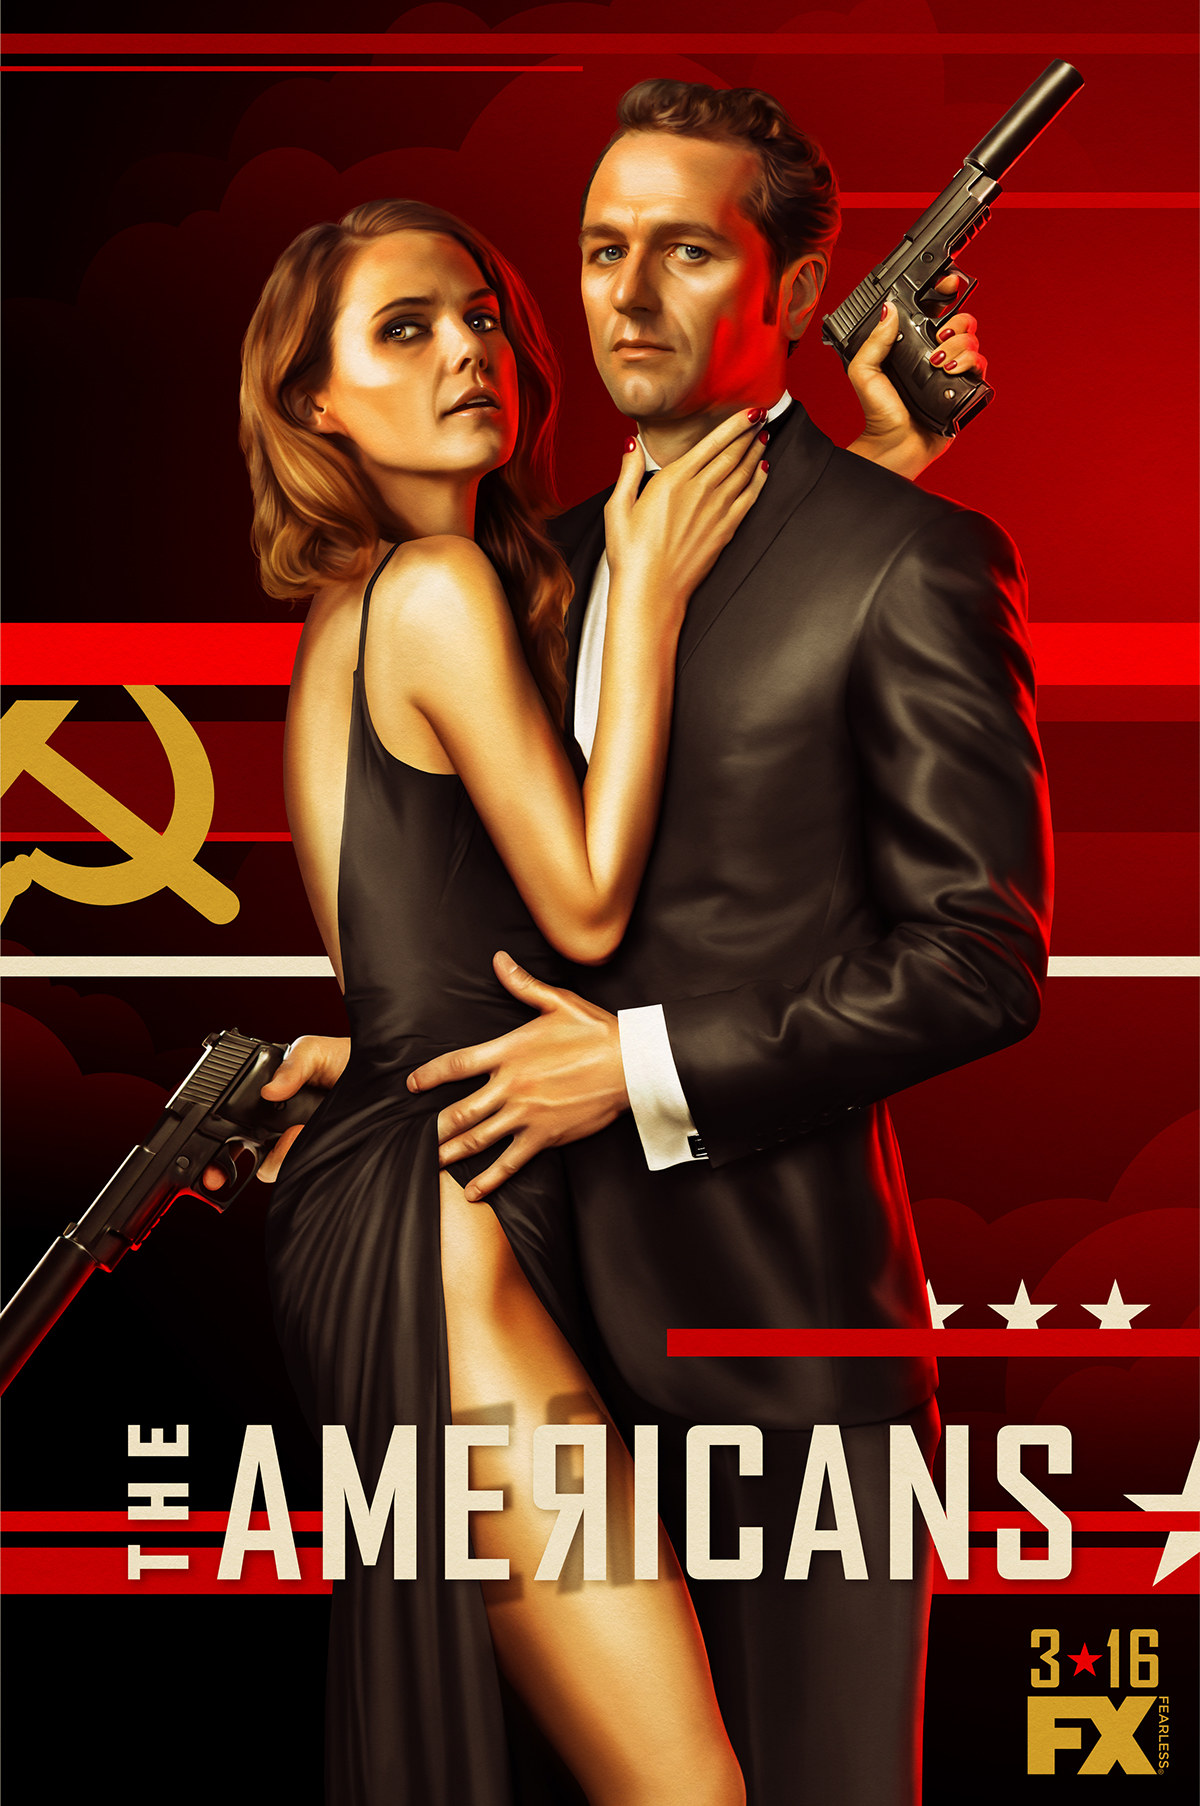 the americans Americans fx Keri Russell Matthew Rhys poster key art spies russian Russia usa family spy Propaganda digital painting